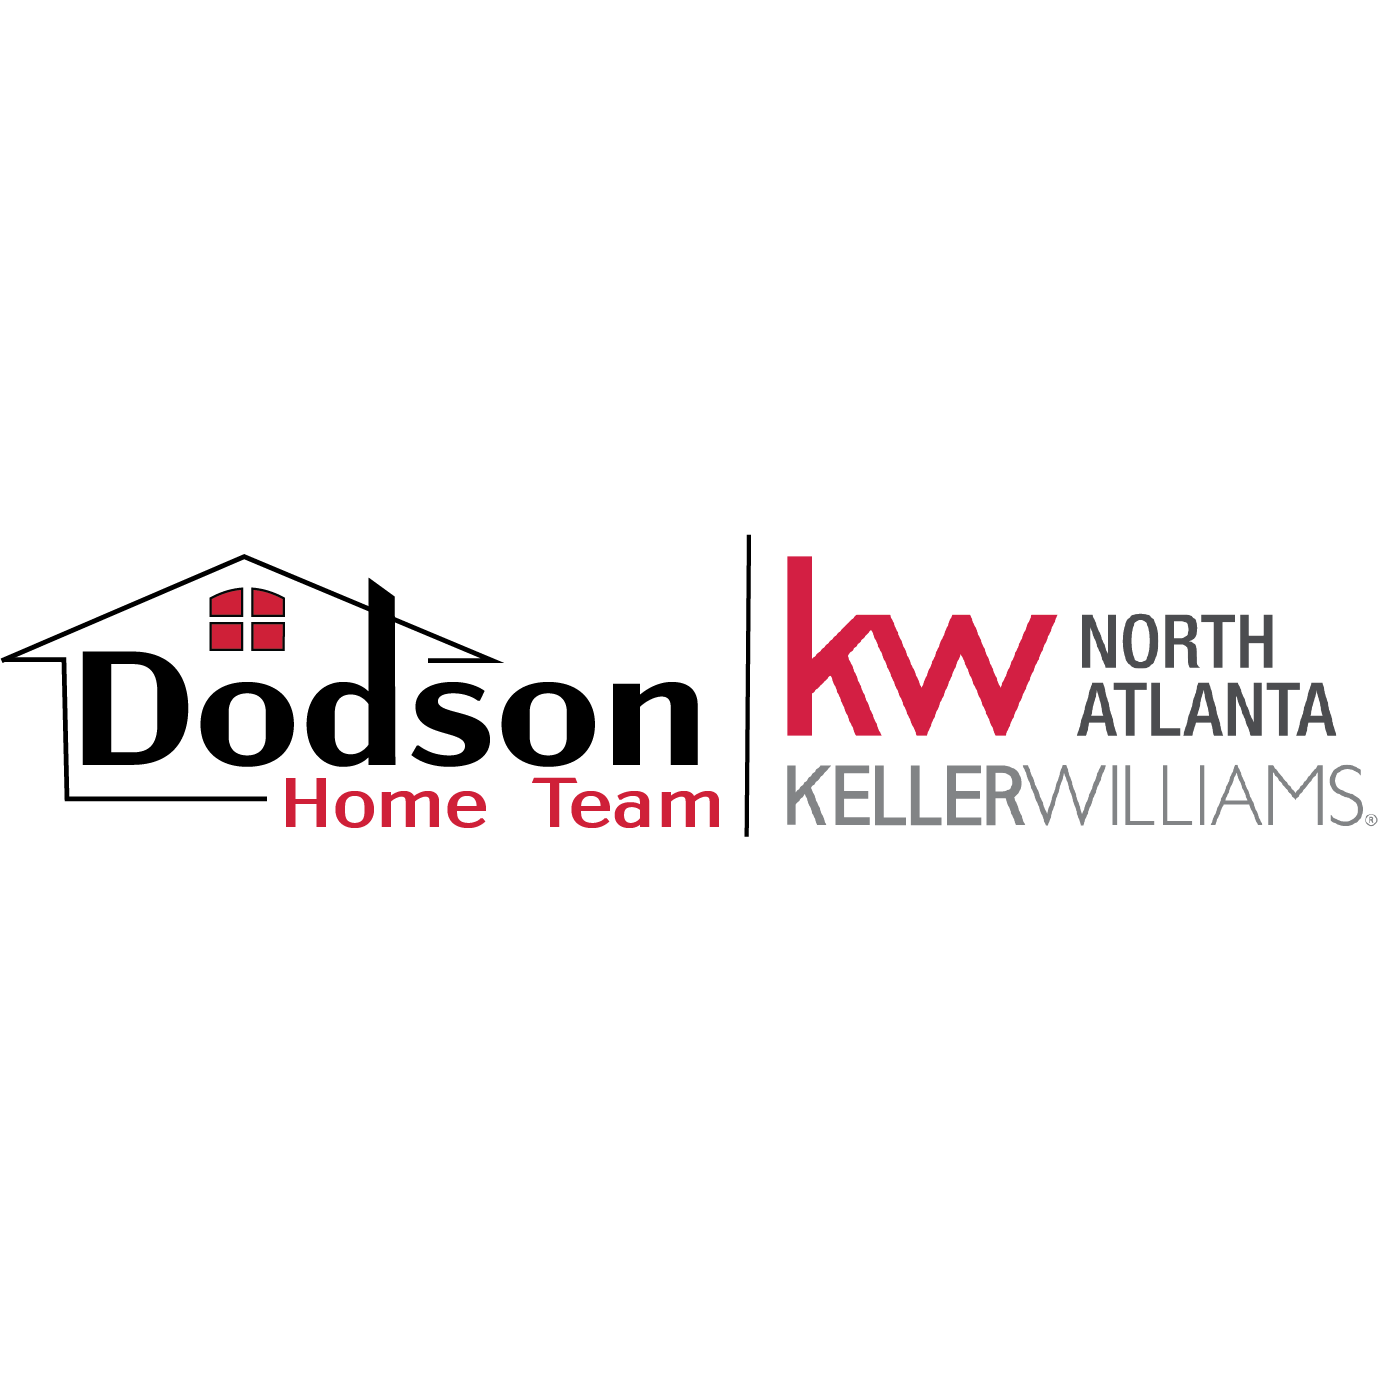 Dodson Home Team of Keller Williams North Atlanta